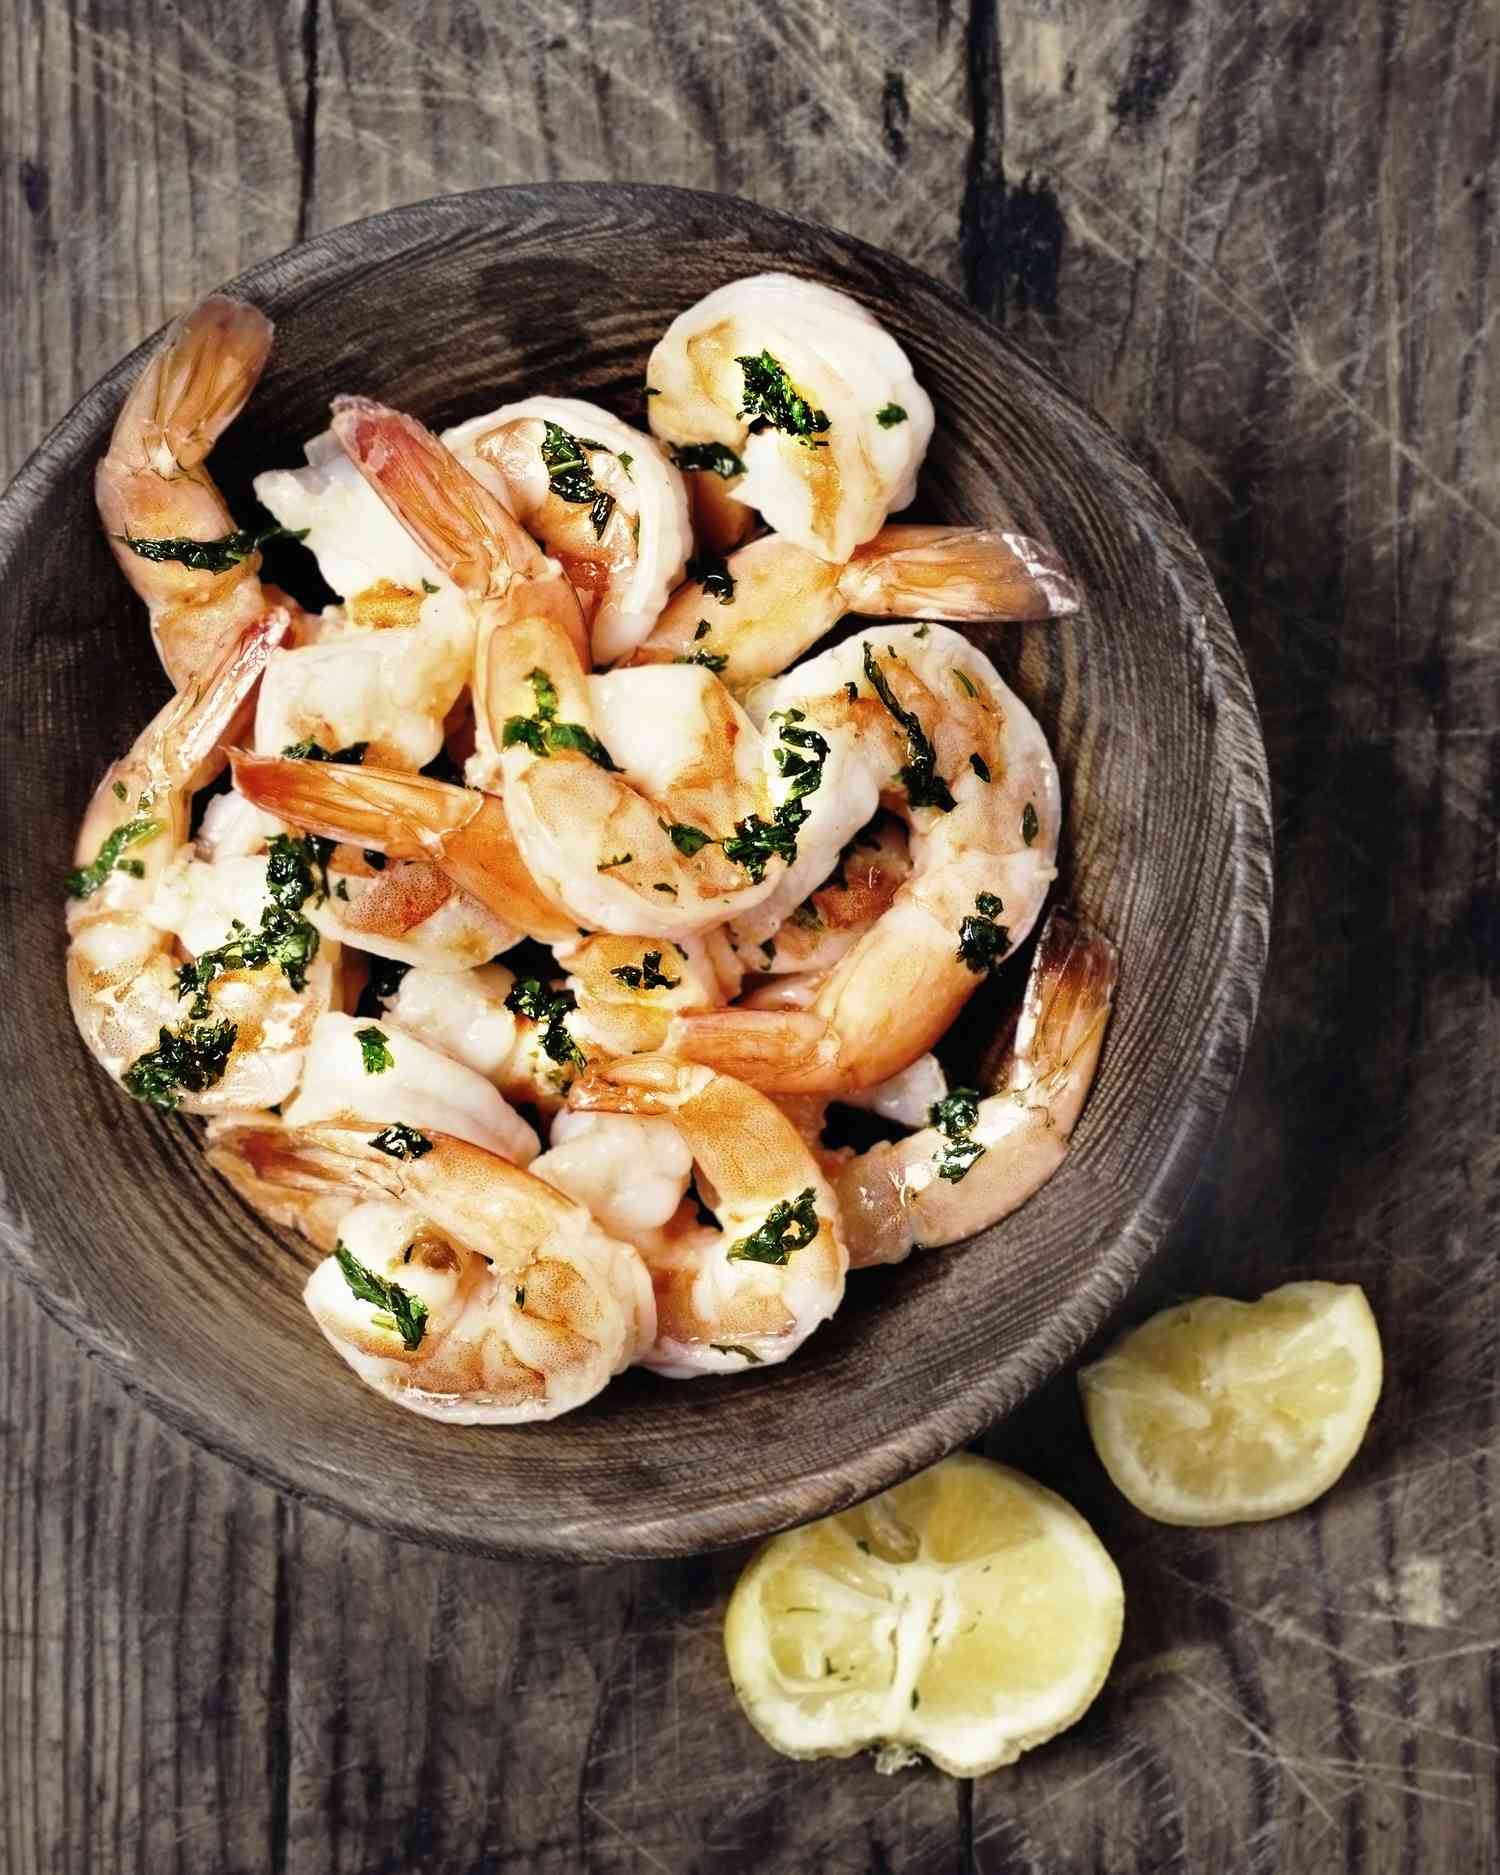 Gulf shrimp with lemon and garlic